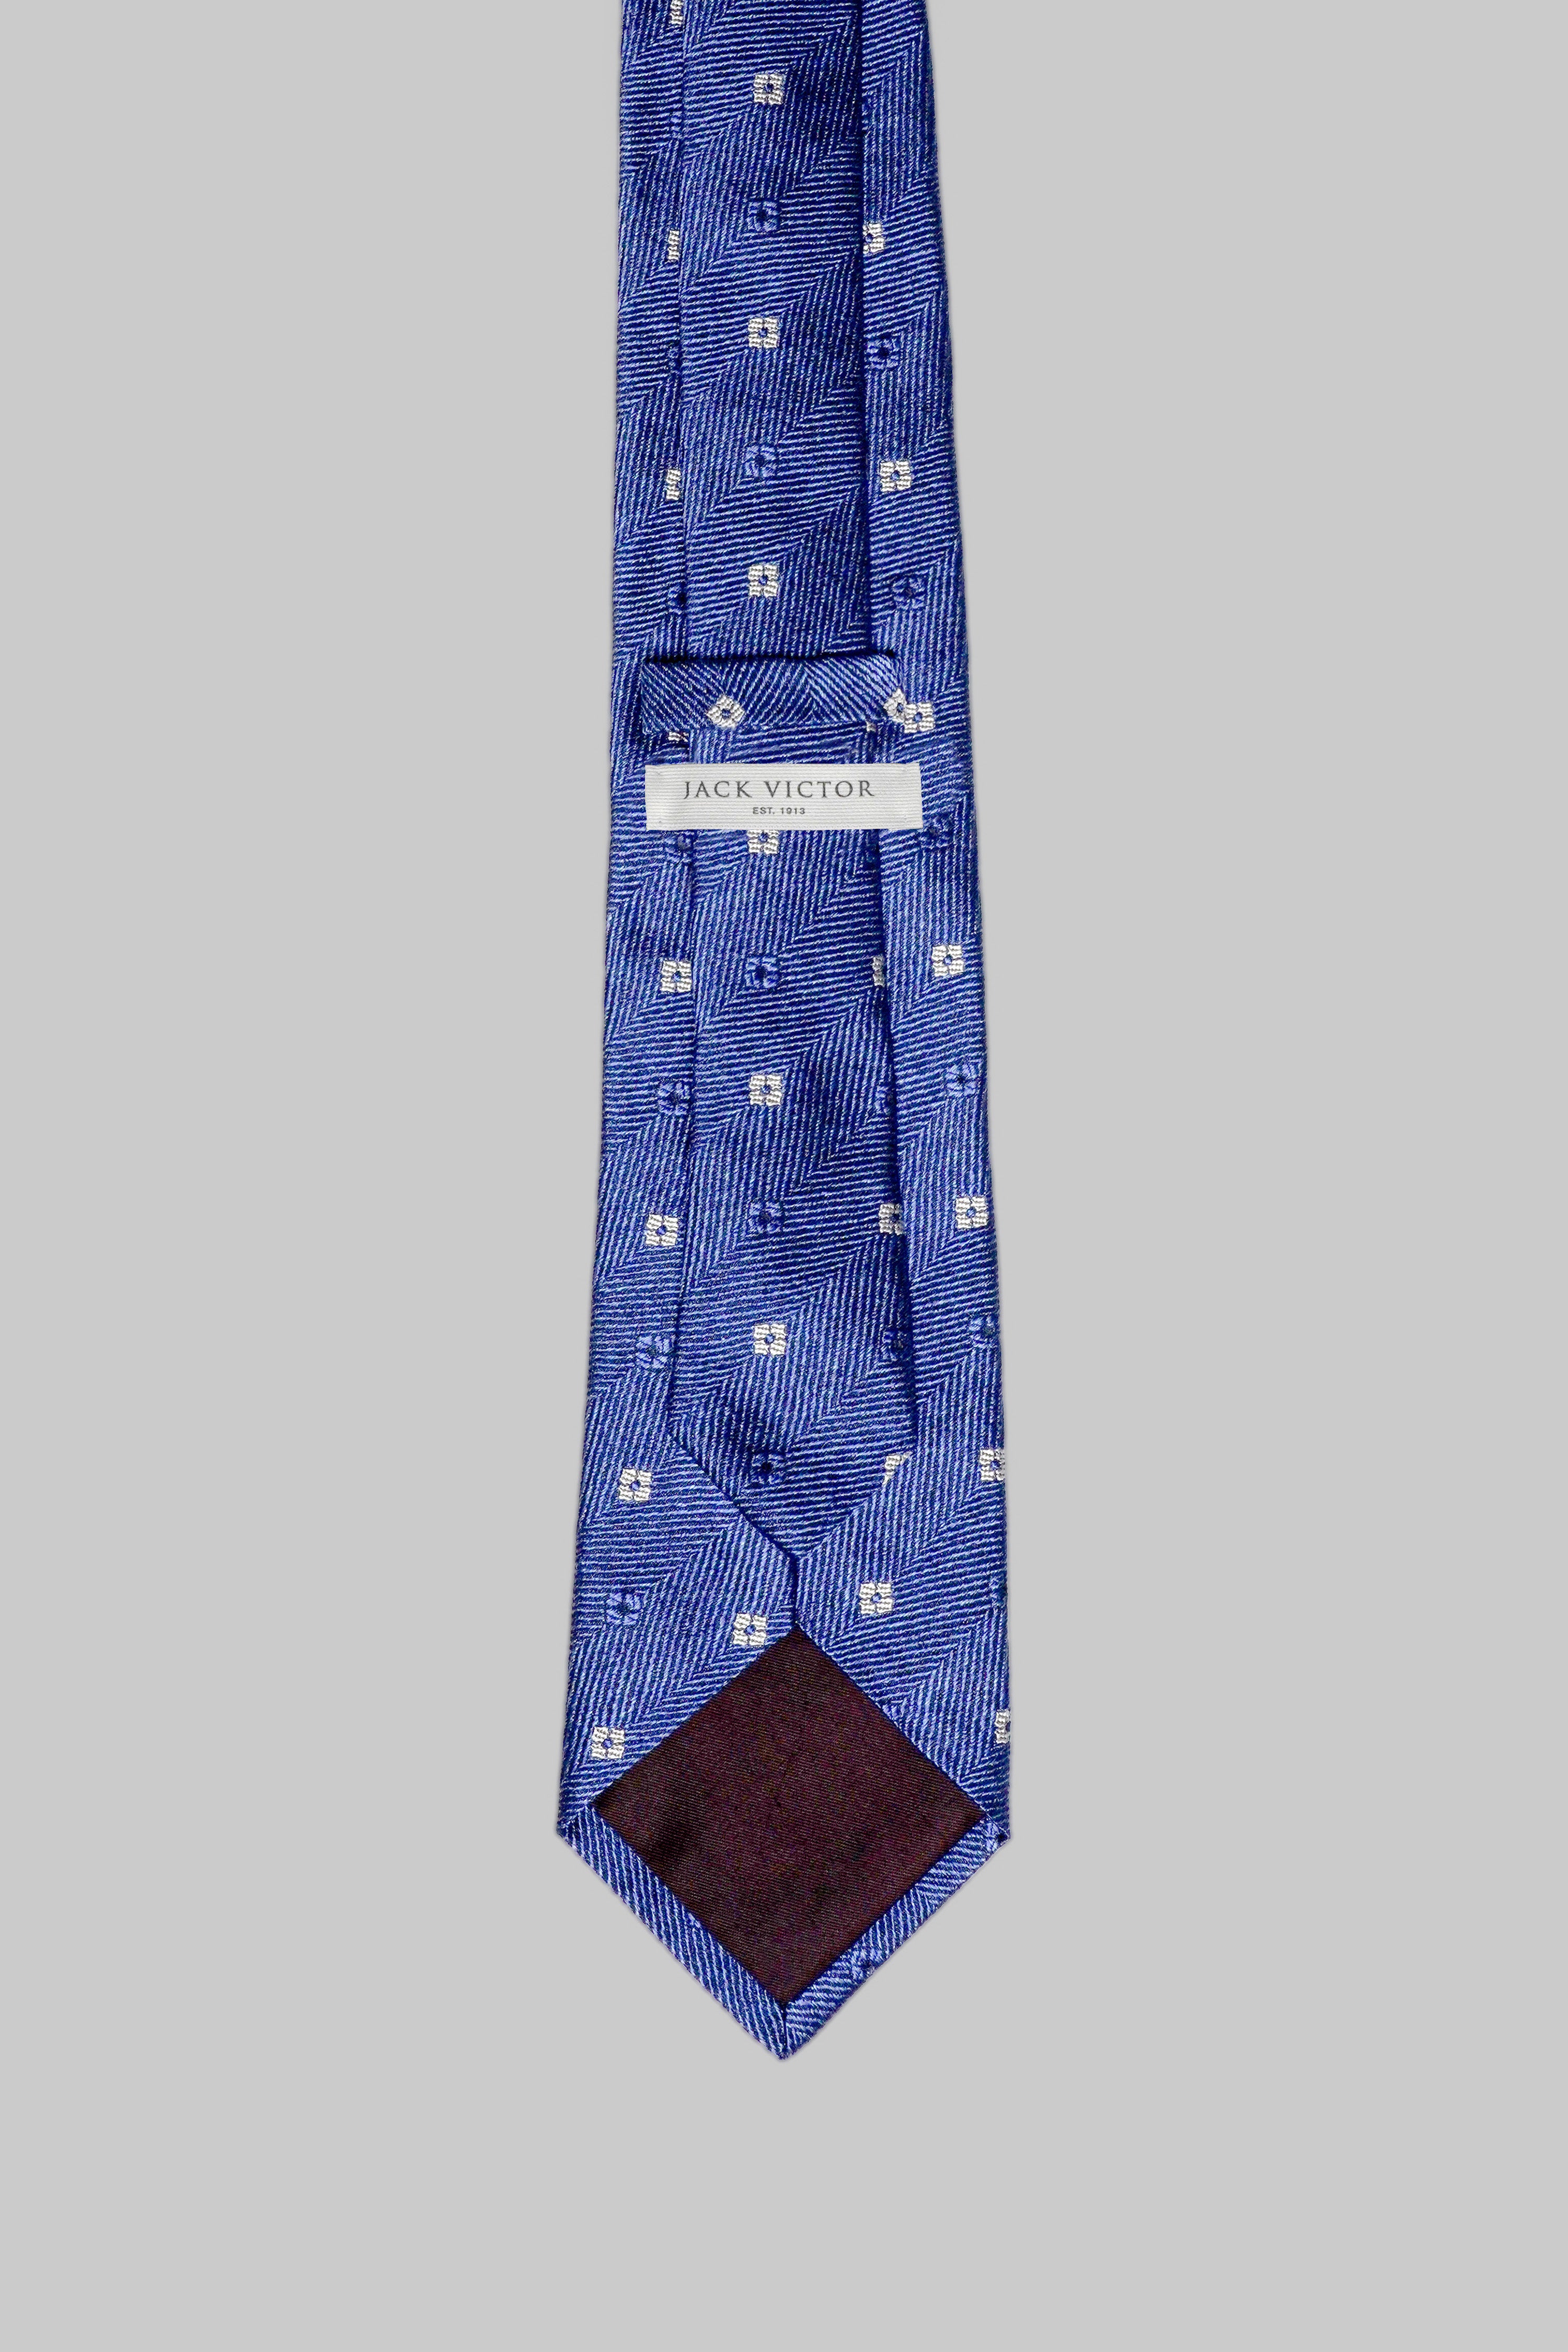 Vue alternative 2 Bethune cravate tissée en bleu